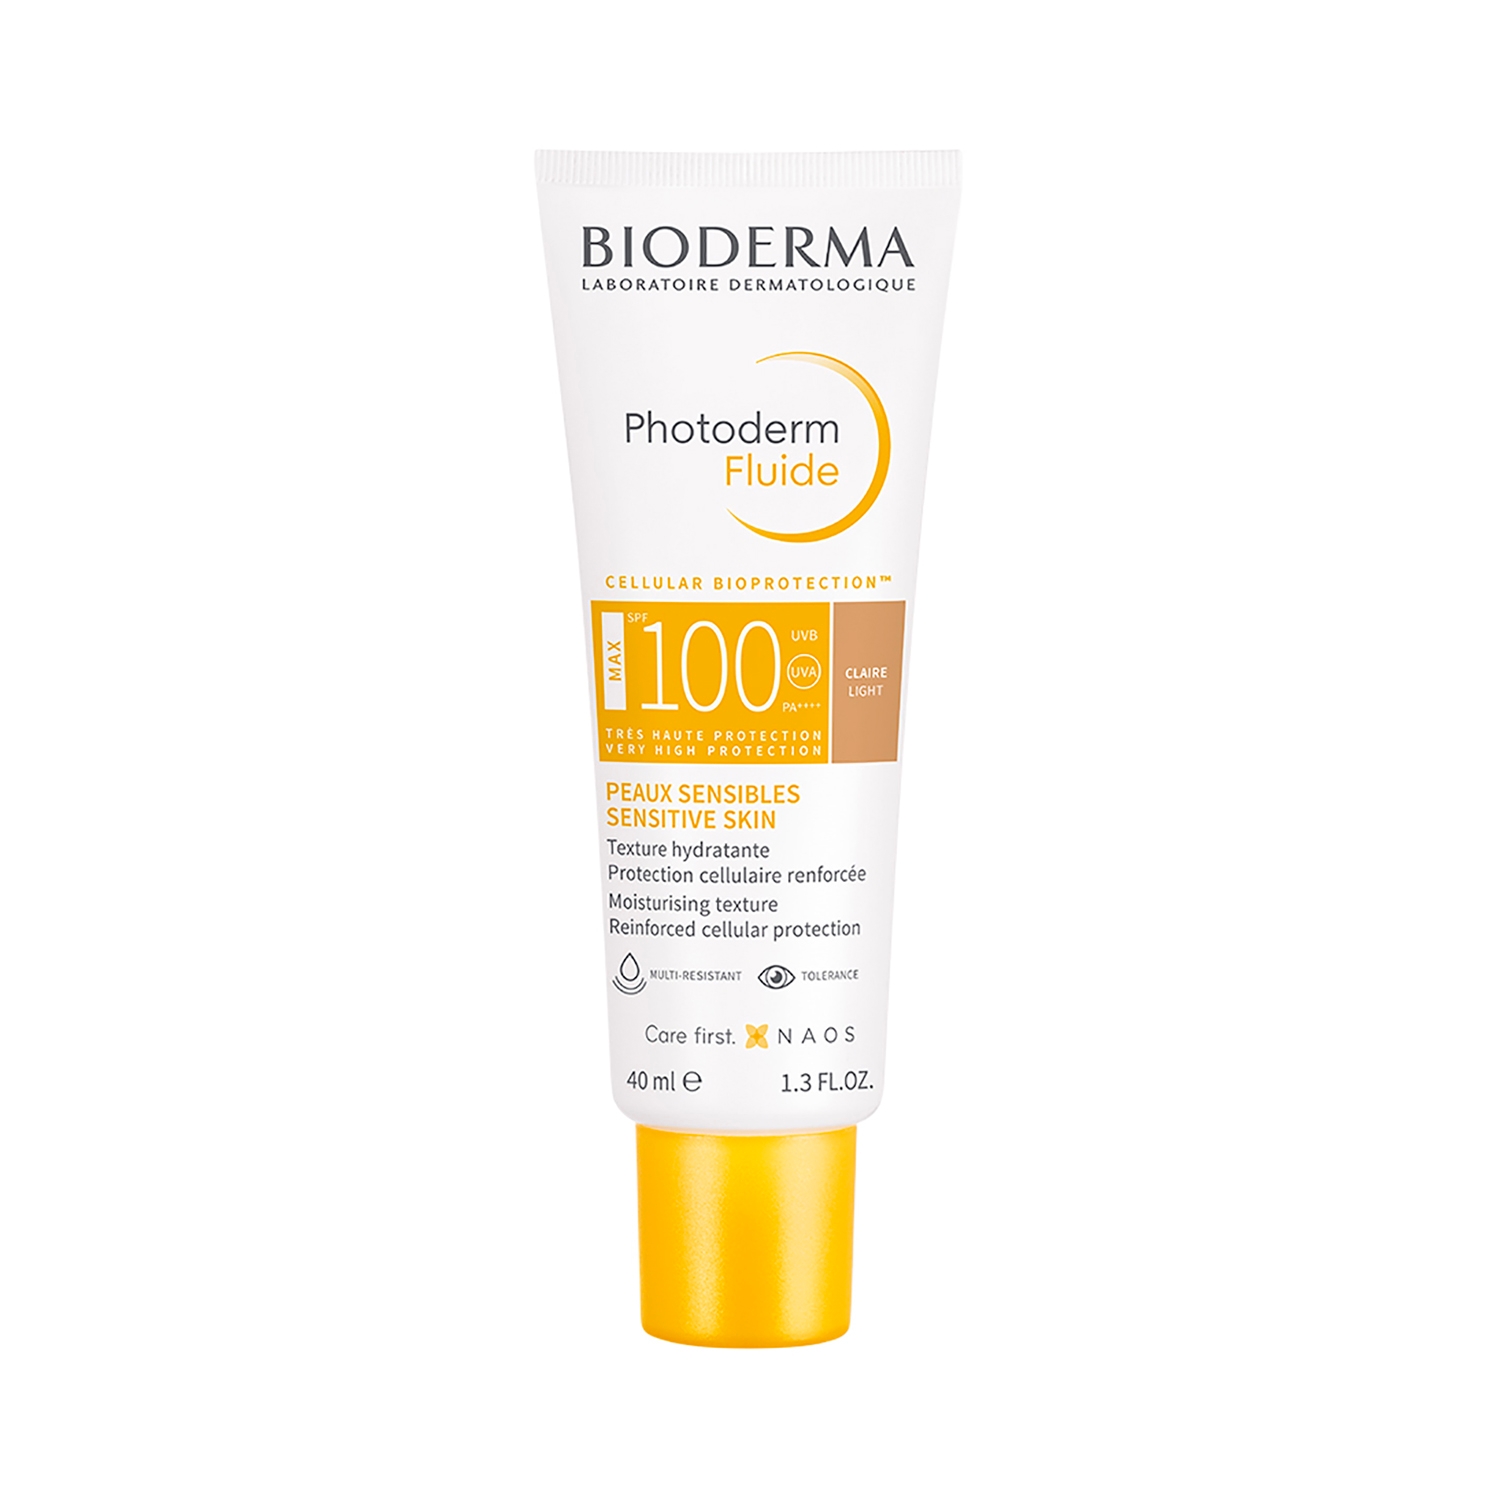 Bioderma | Bioderma Photoderm Aquafluide Sunscreen SPF 100+ Claire UVA Protection (40ml)